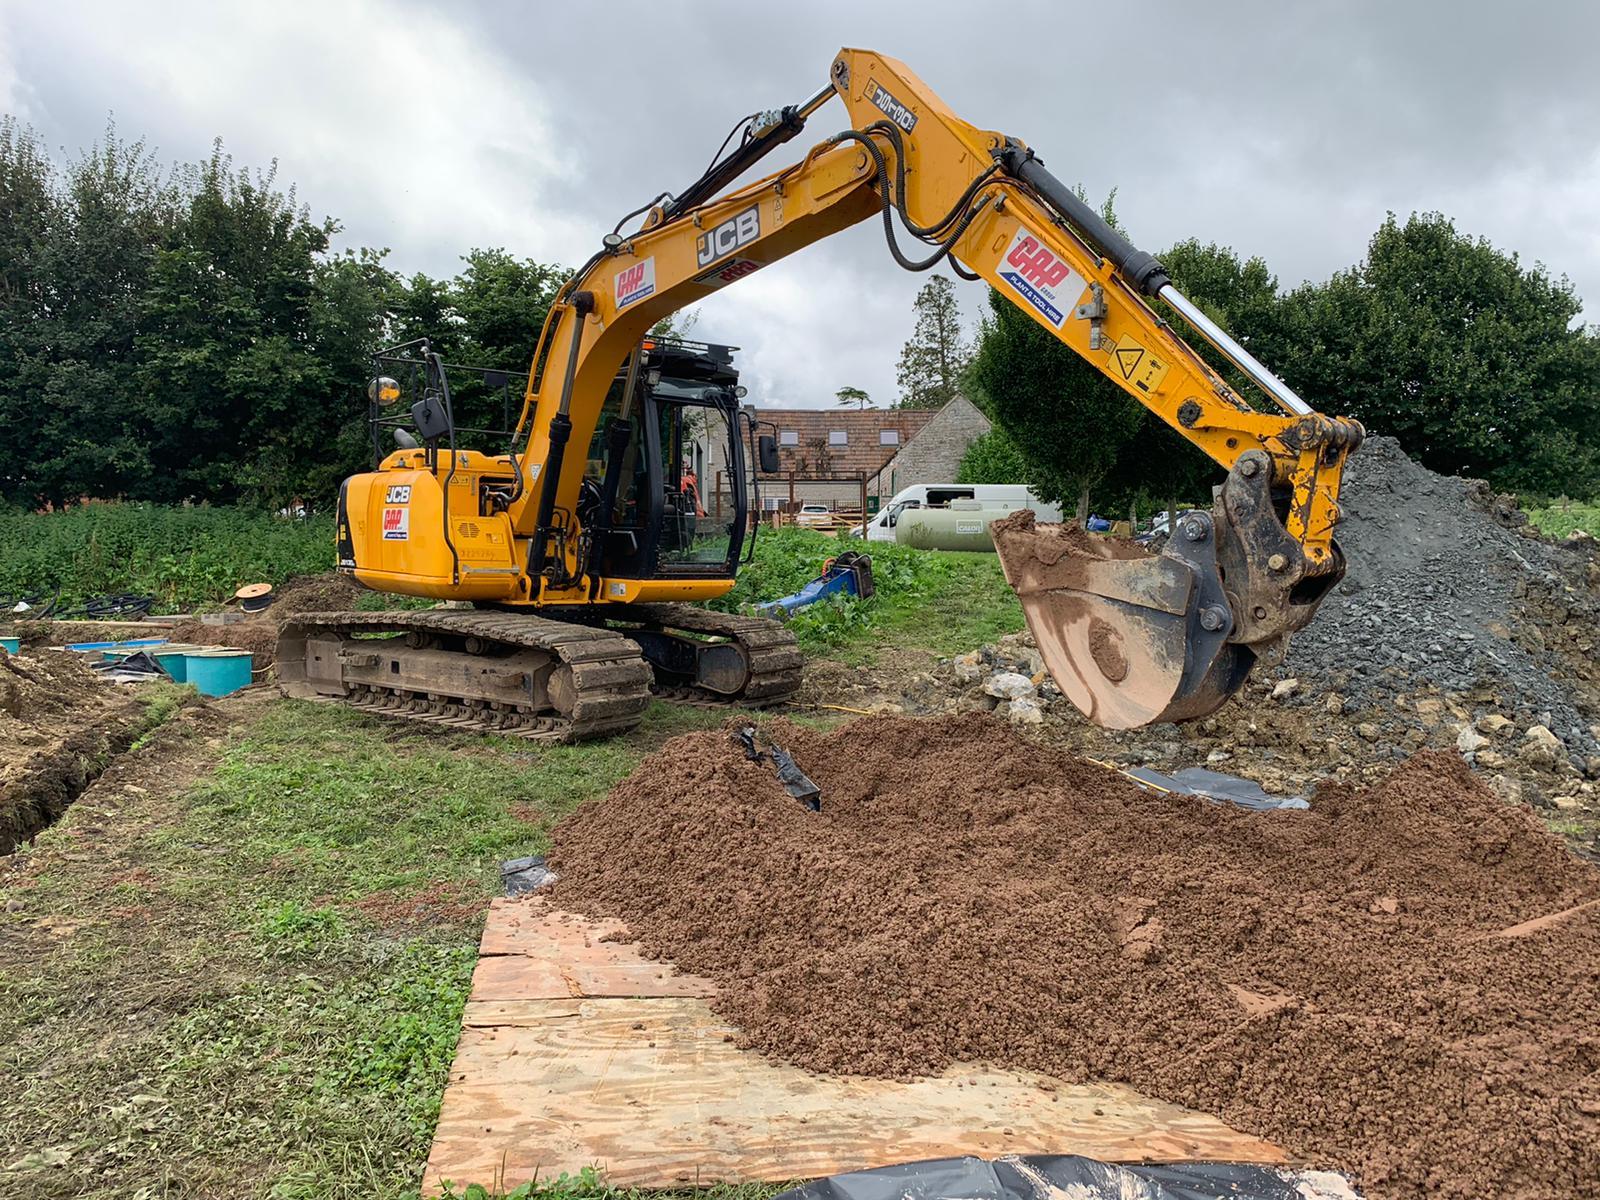 An excavator on site